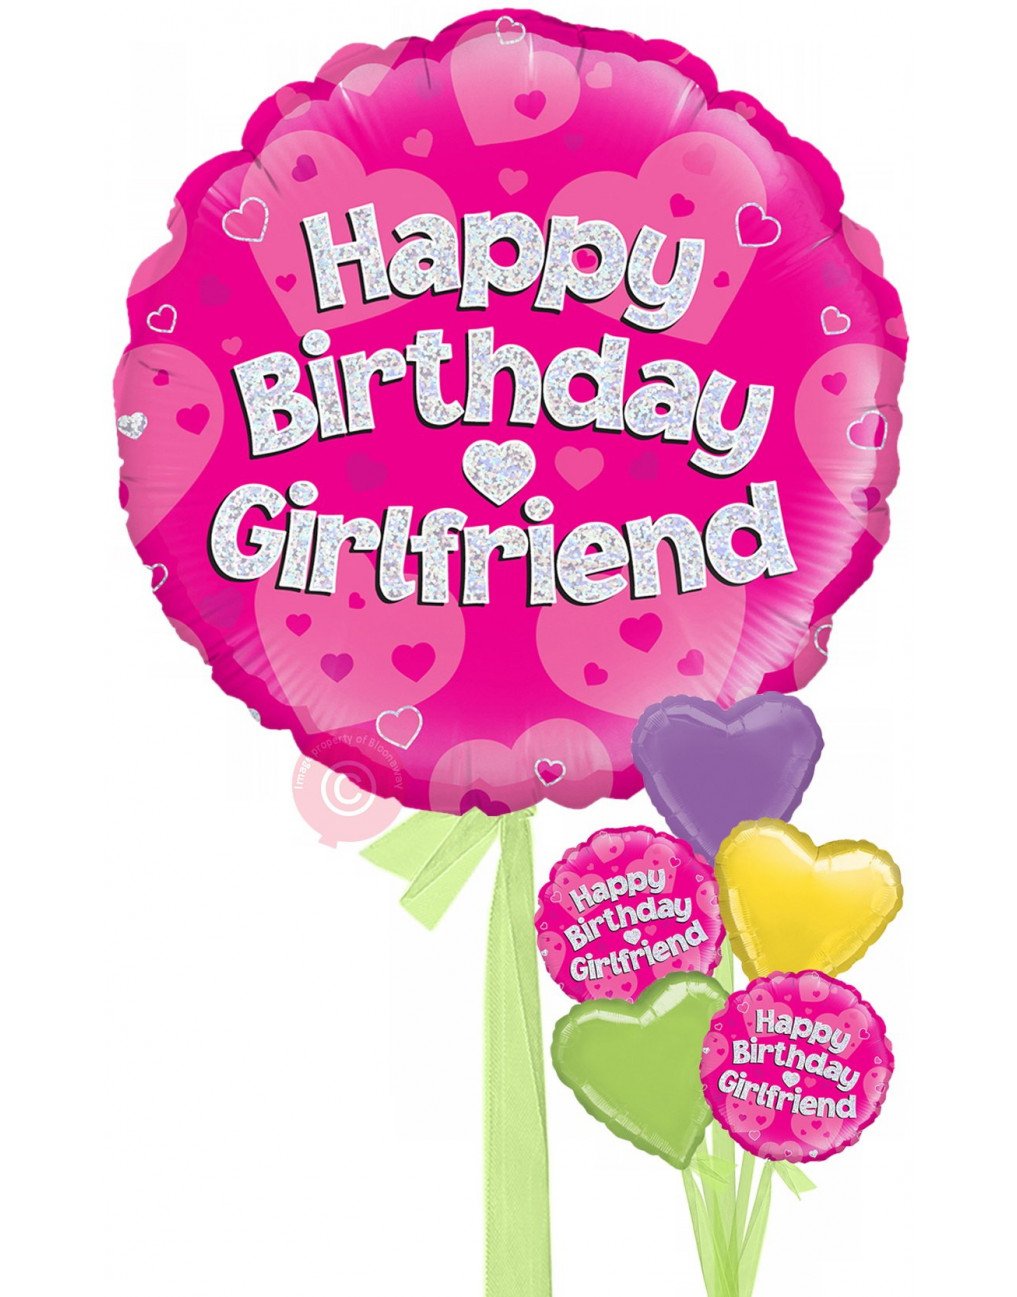 Printable Birthday Cards For Girlfriend - Printable Templates Free